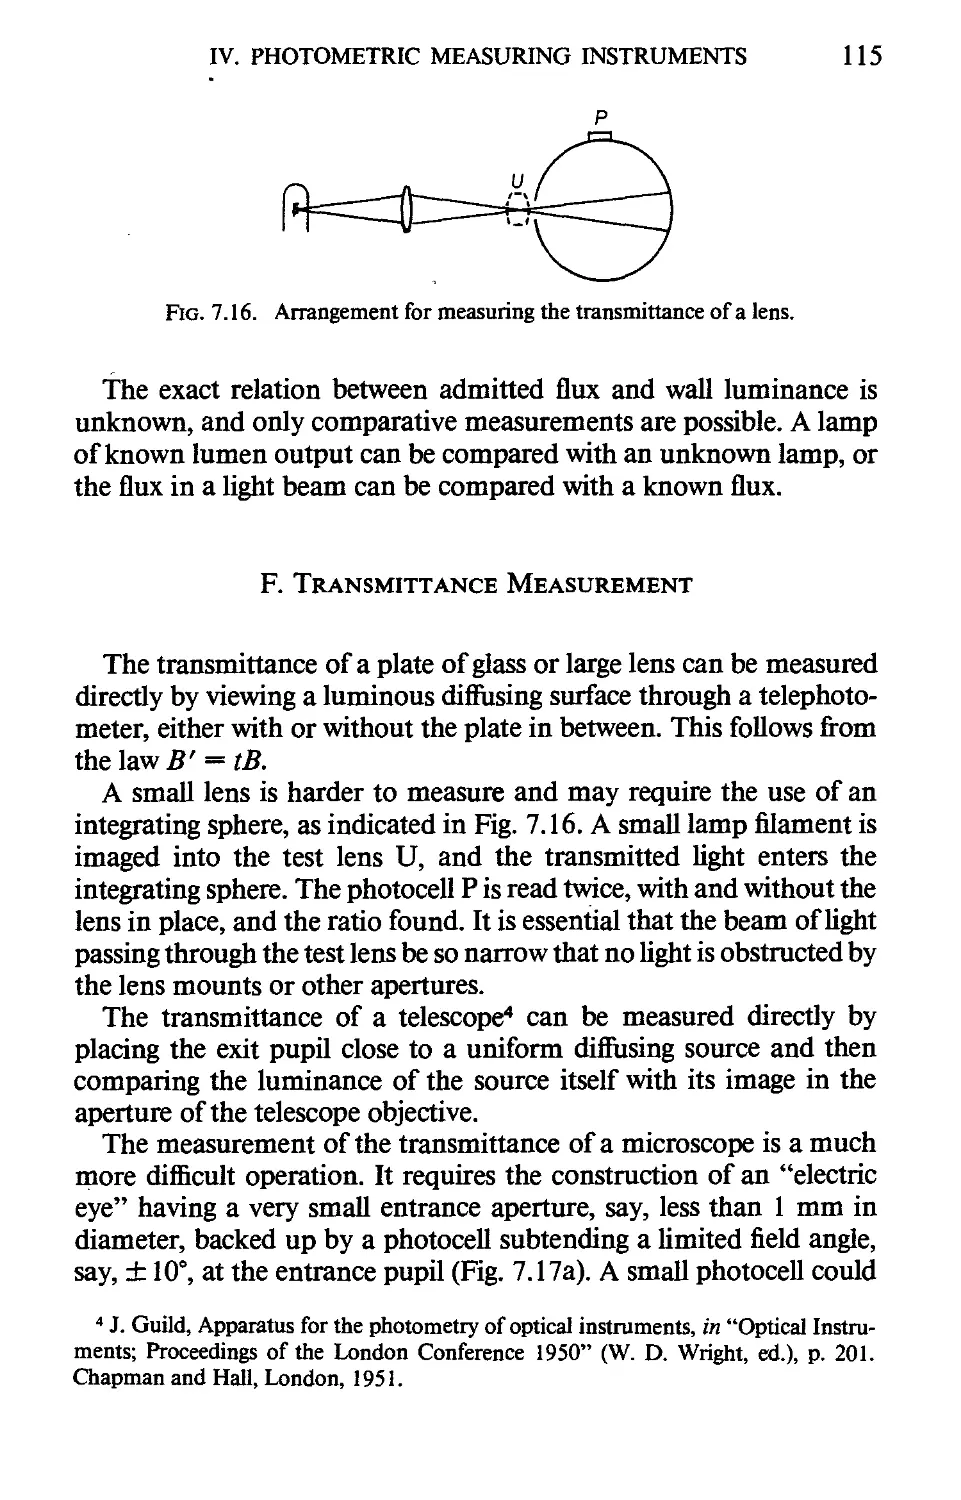 F. Transmittance Measurement